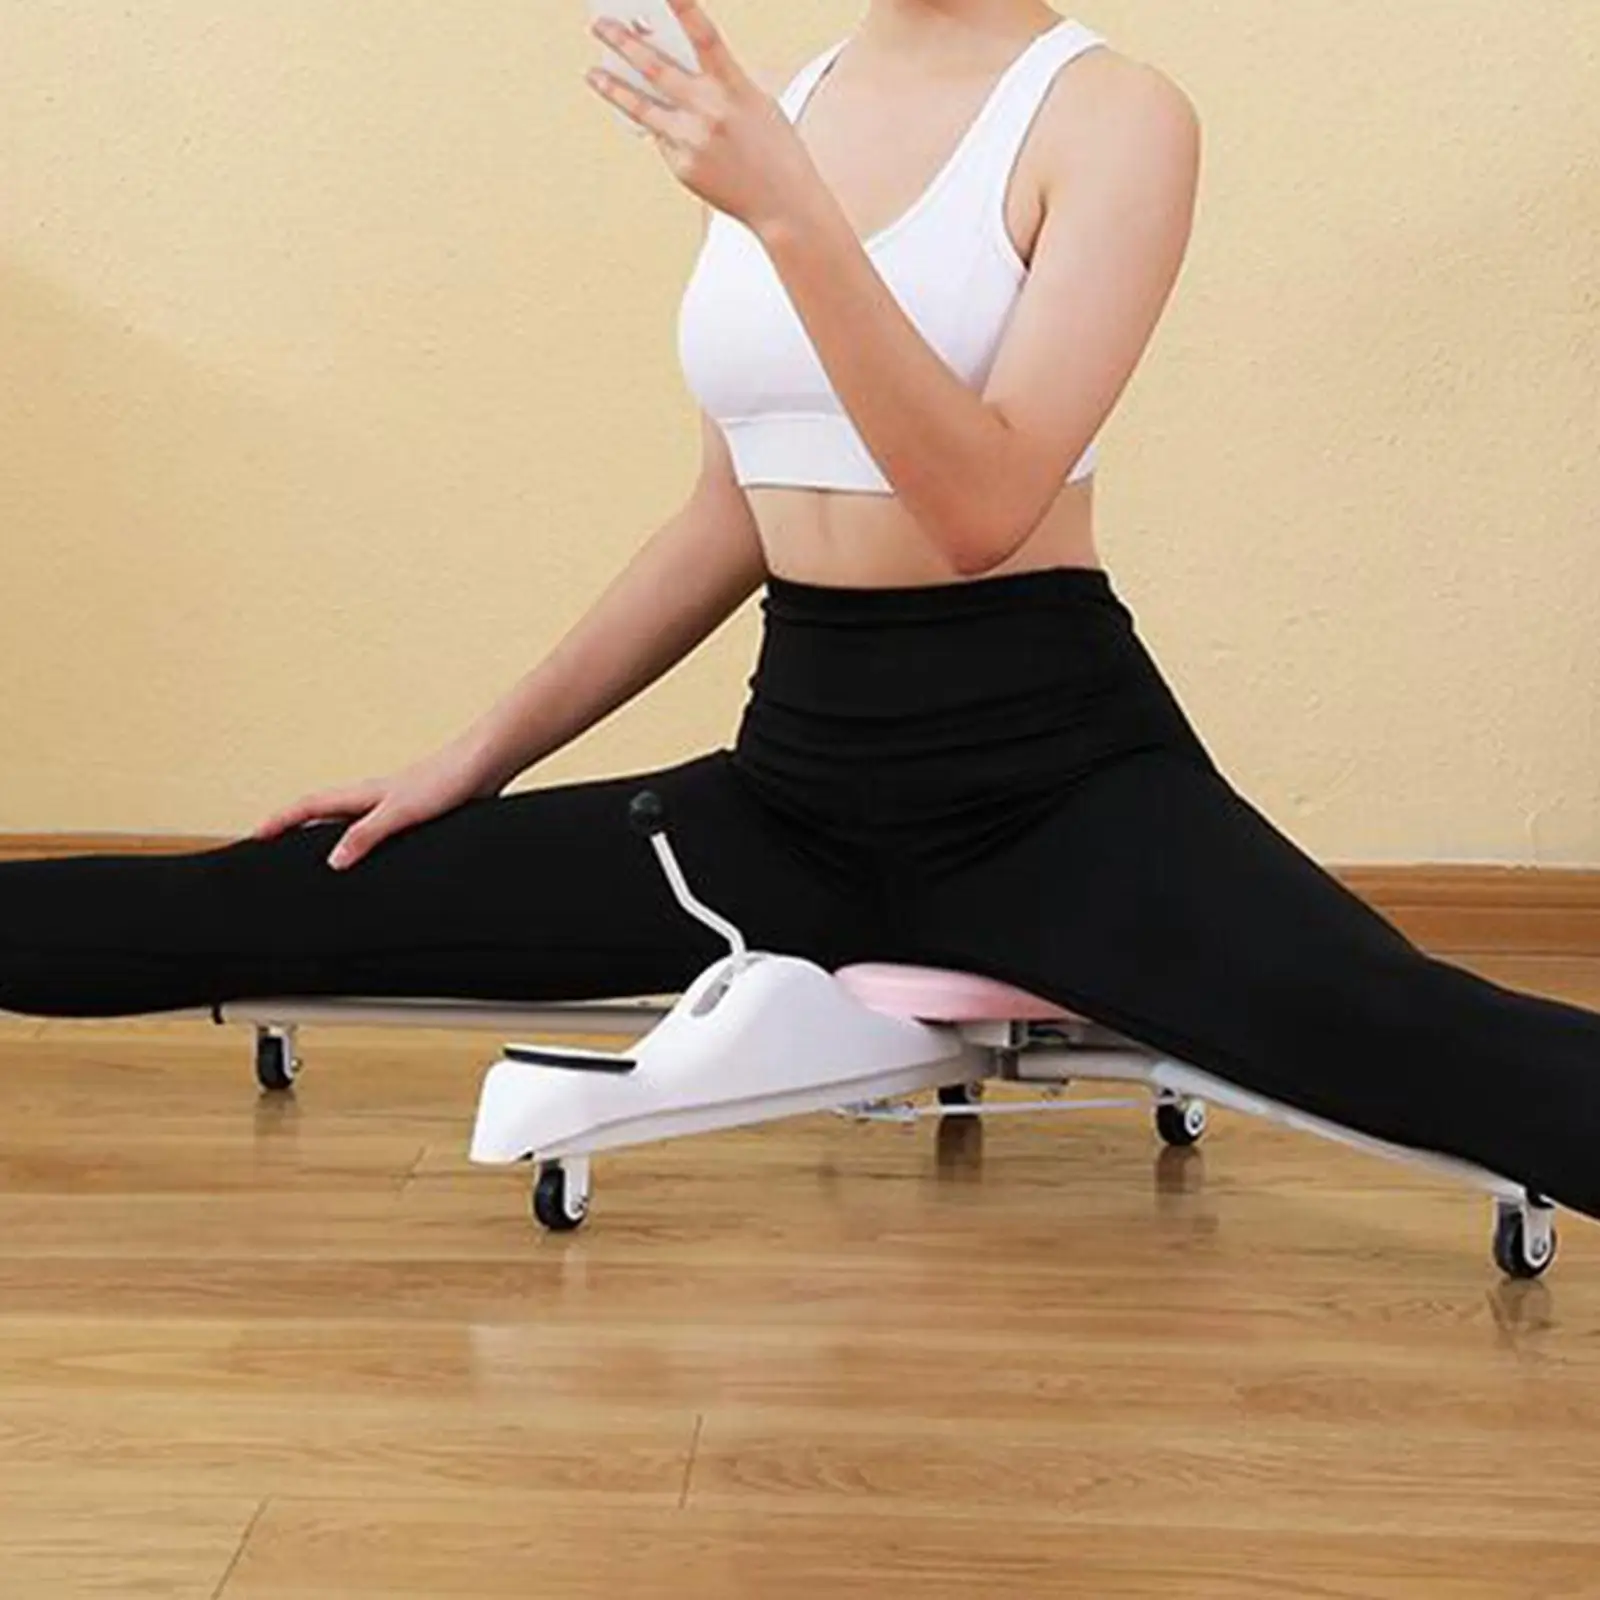 Leg Stretcher Fitness Exercise Stretching Adjustable Length 0-210 Degree Split Machine for Train Leg Women Men Workout Device